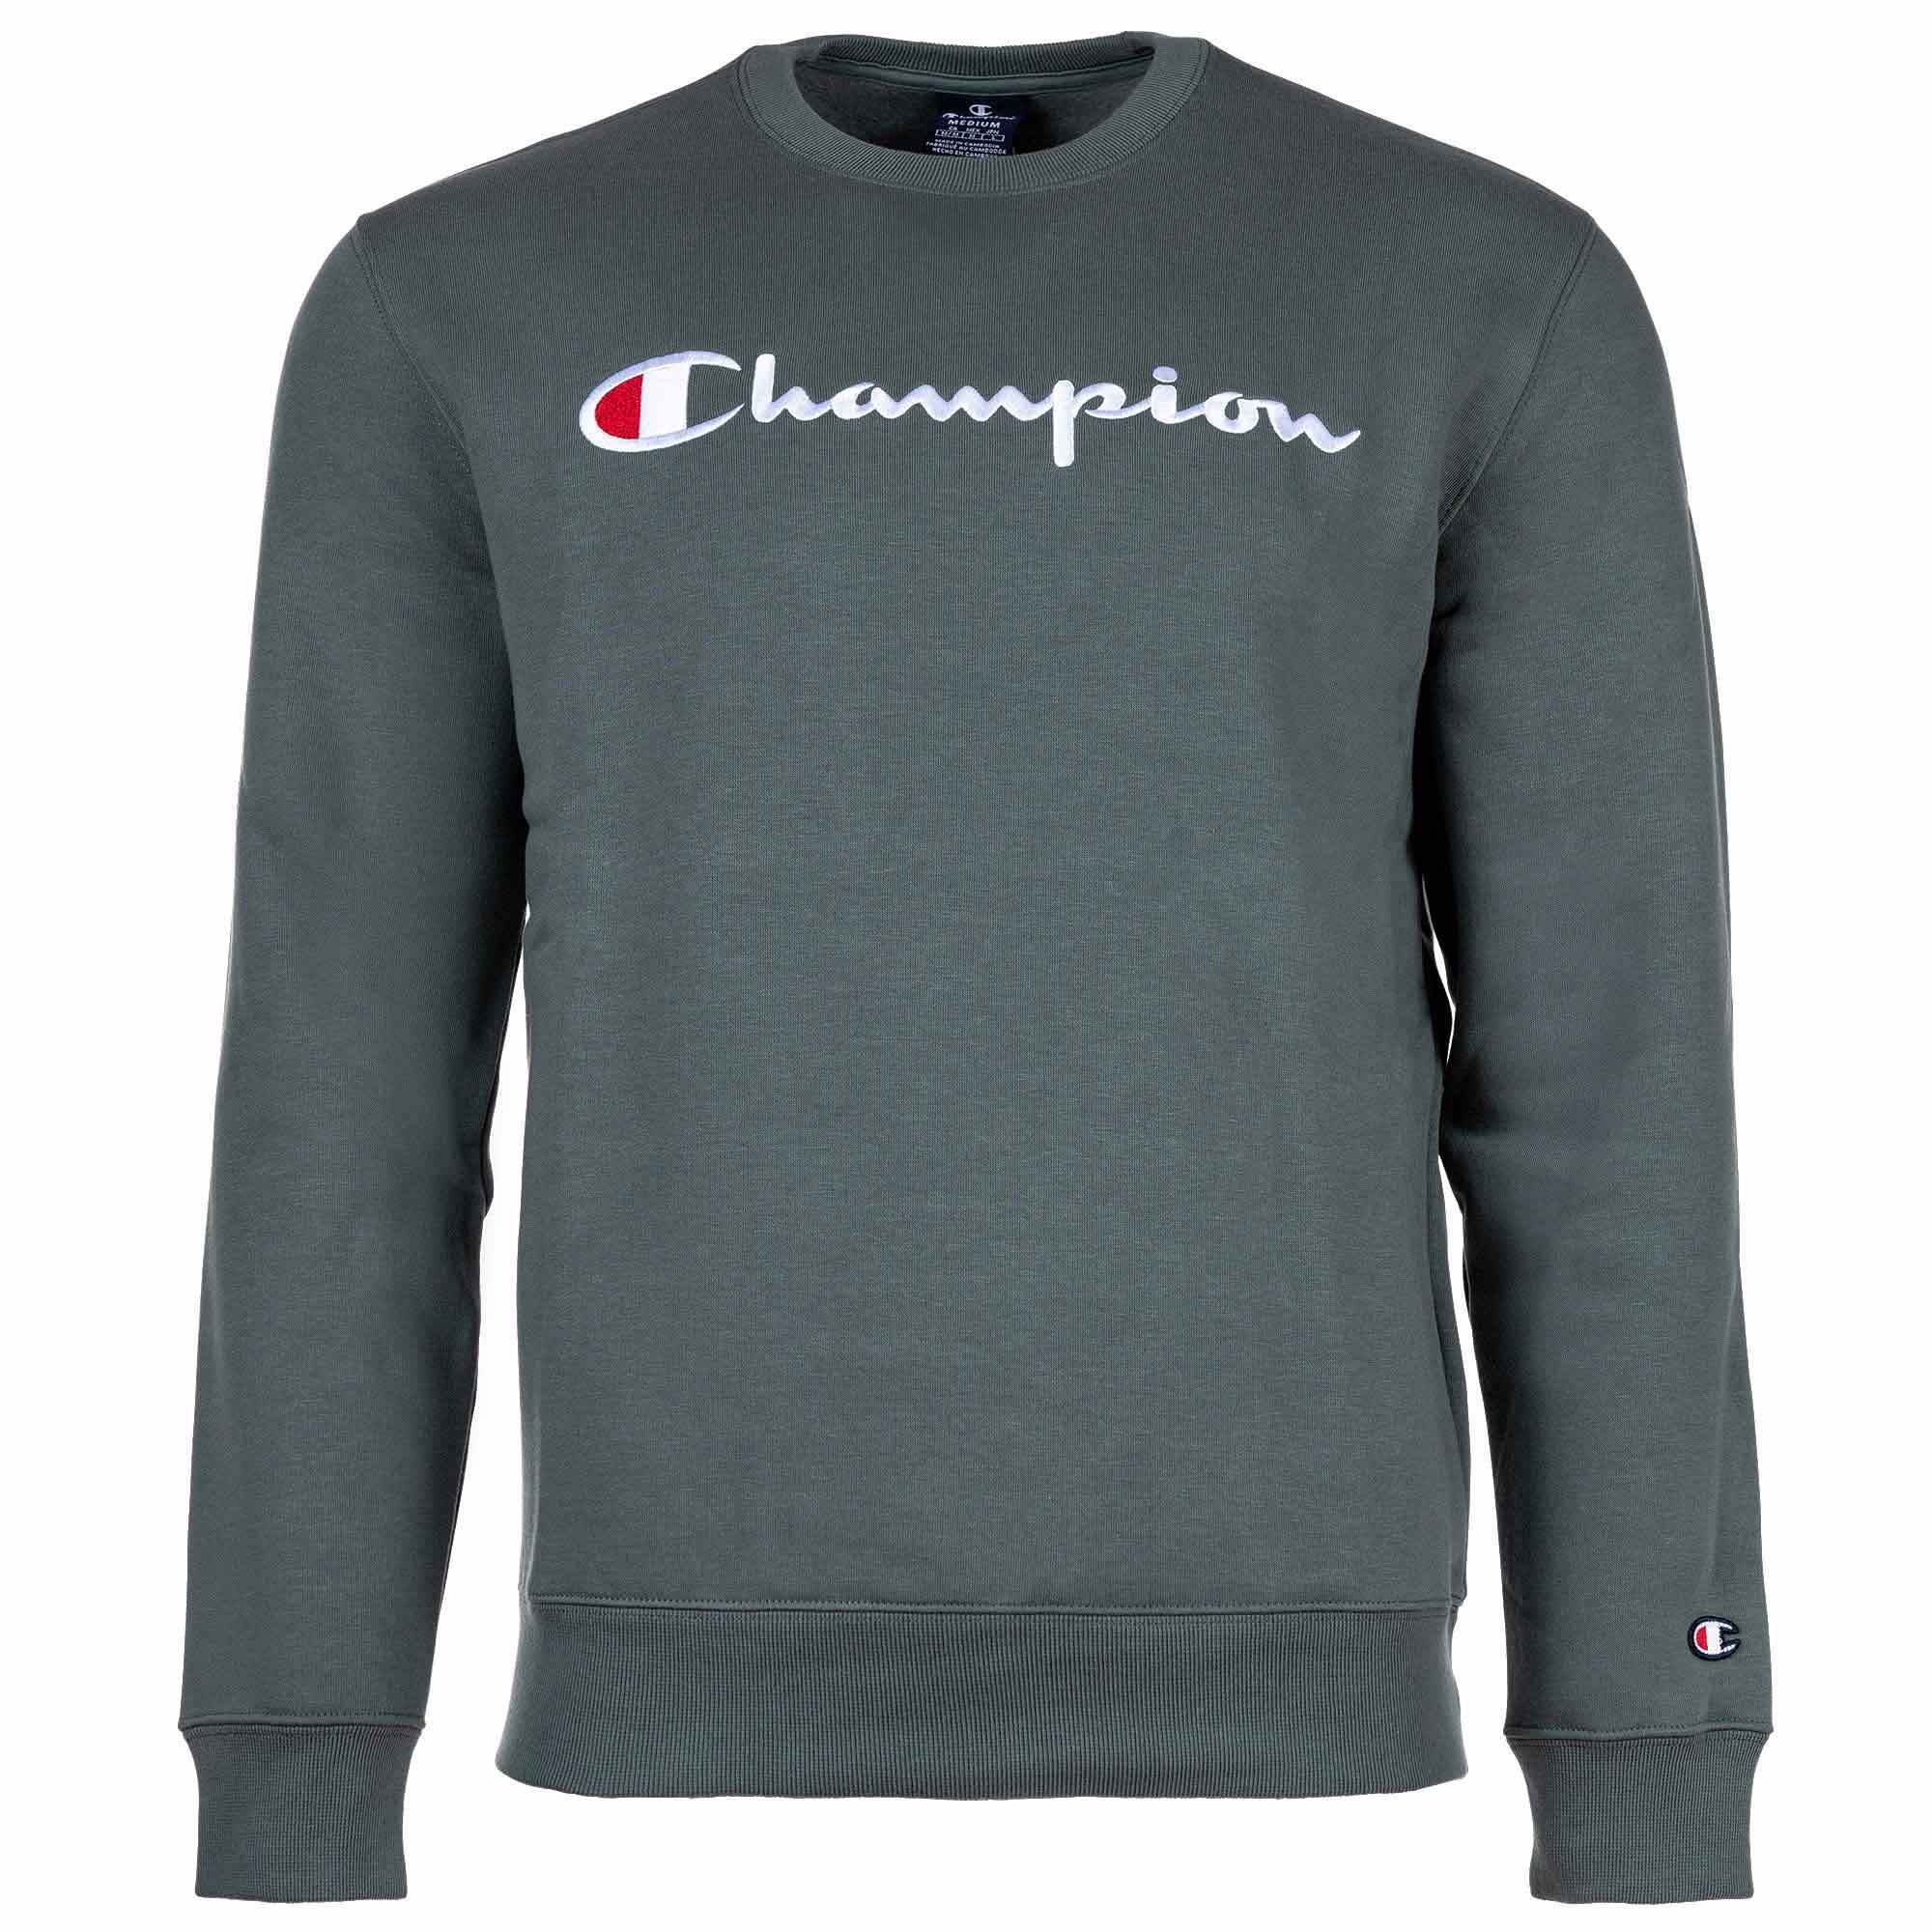 Sweatshirt Champion - Cinza - Sweatshirt Capuz Mulher